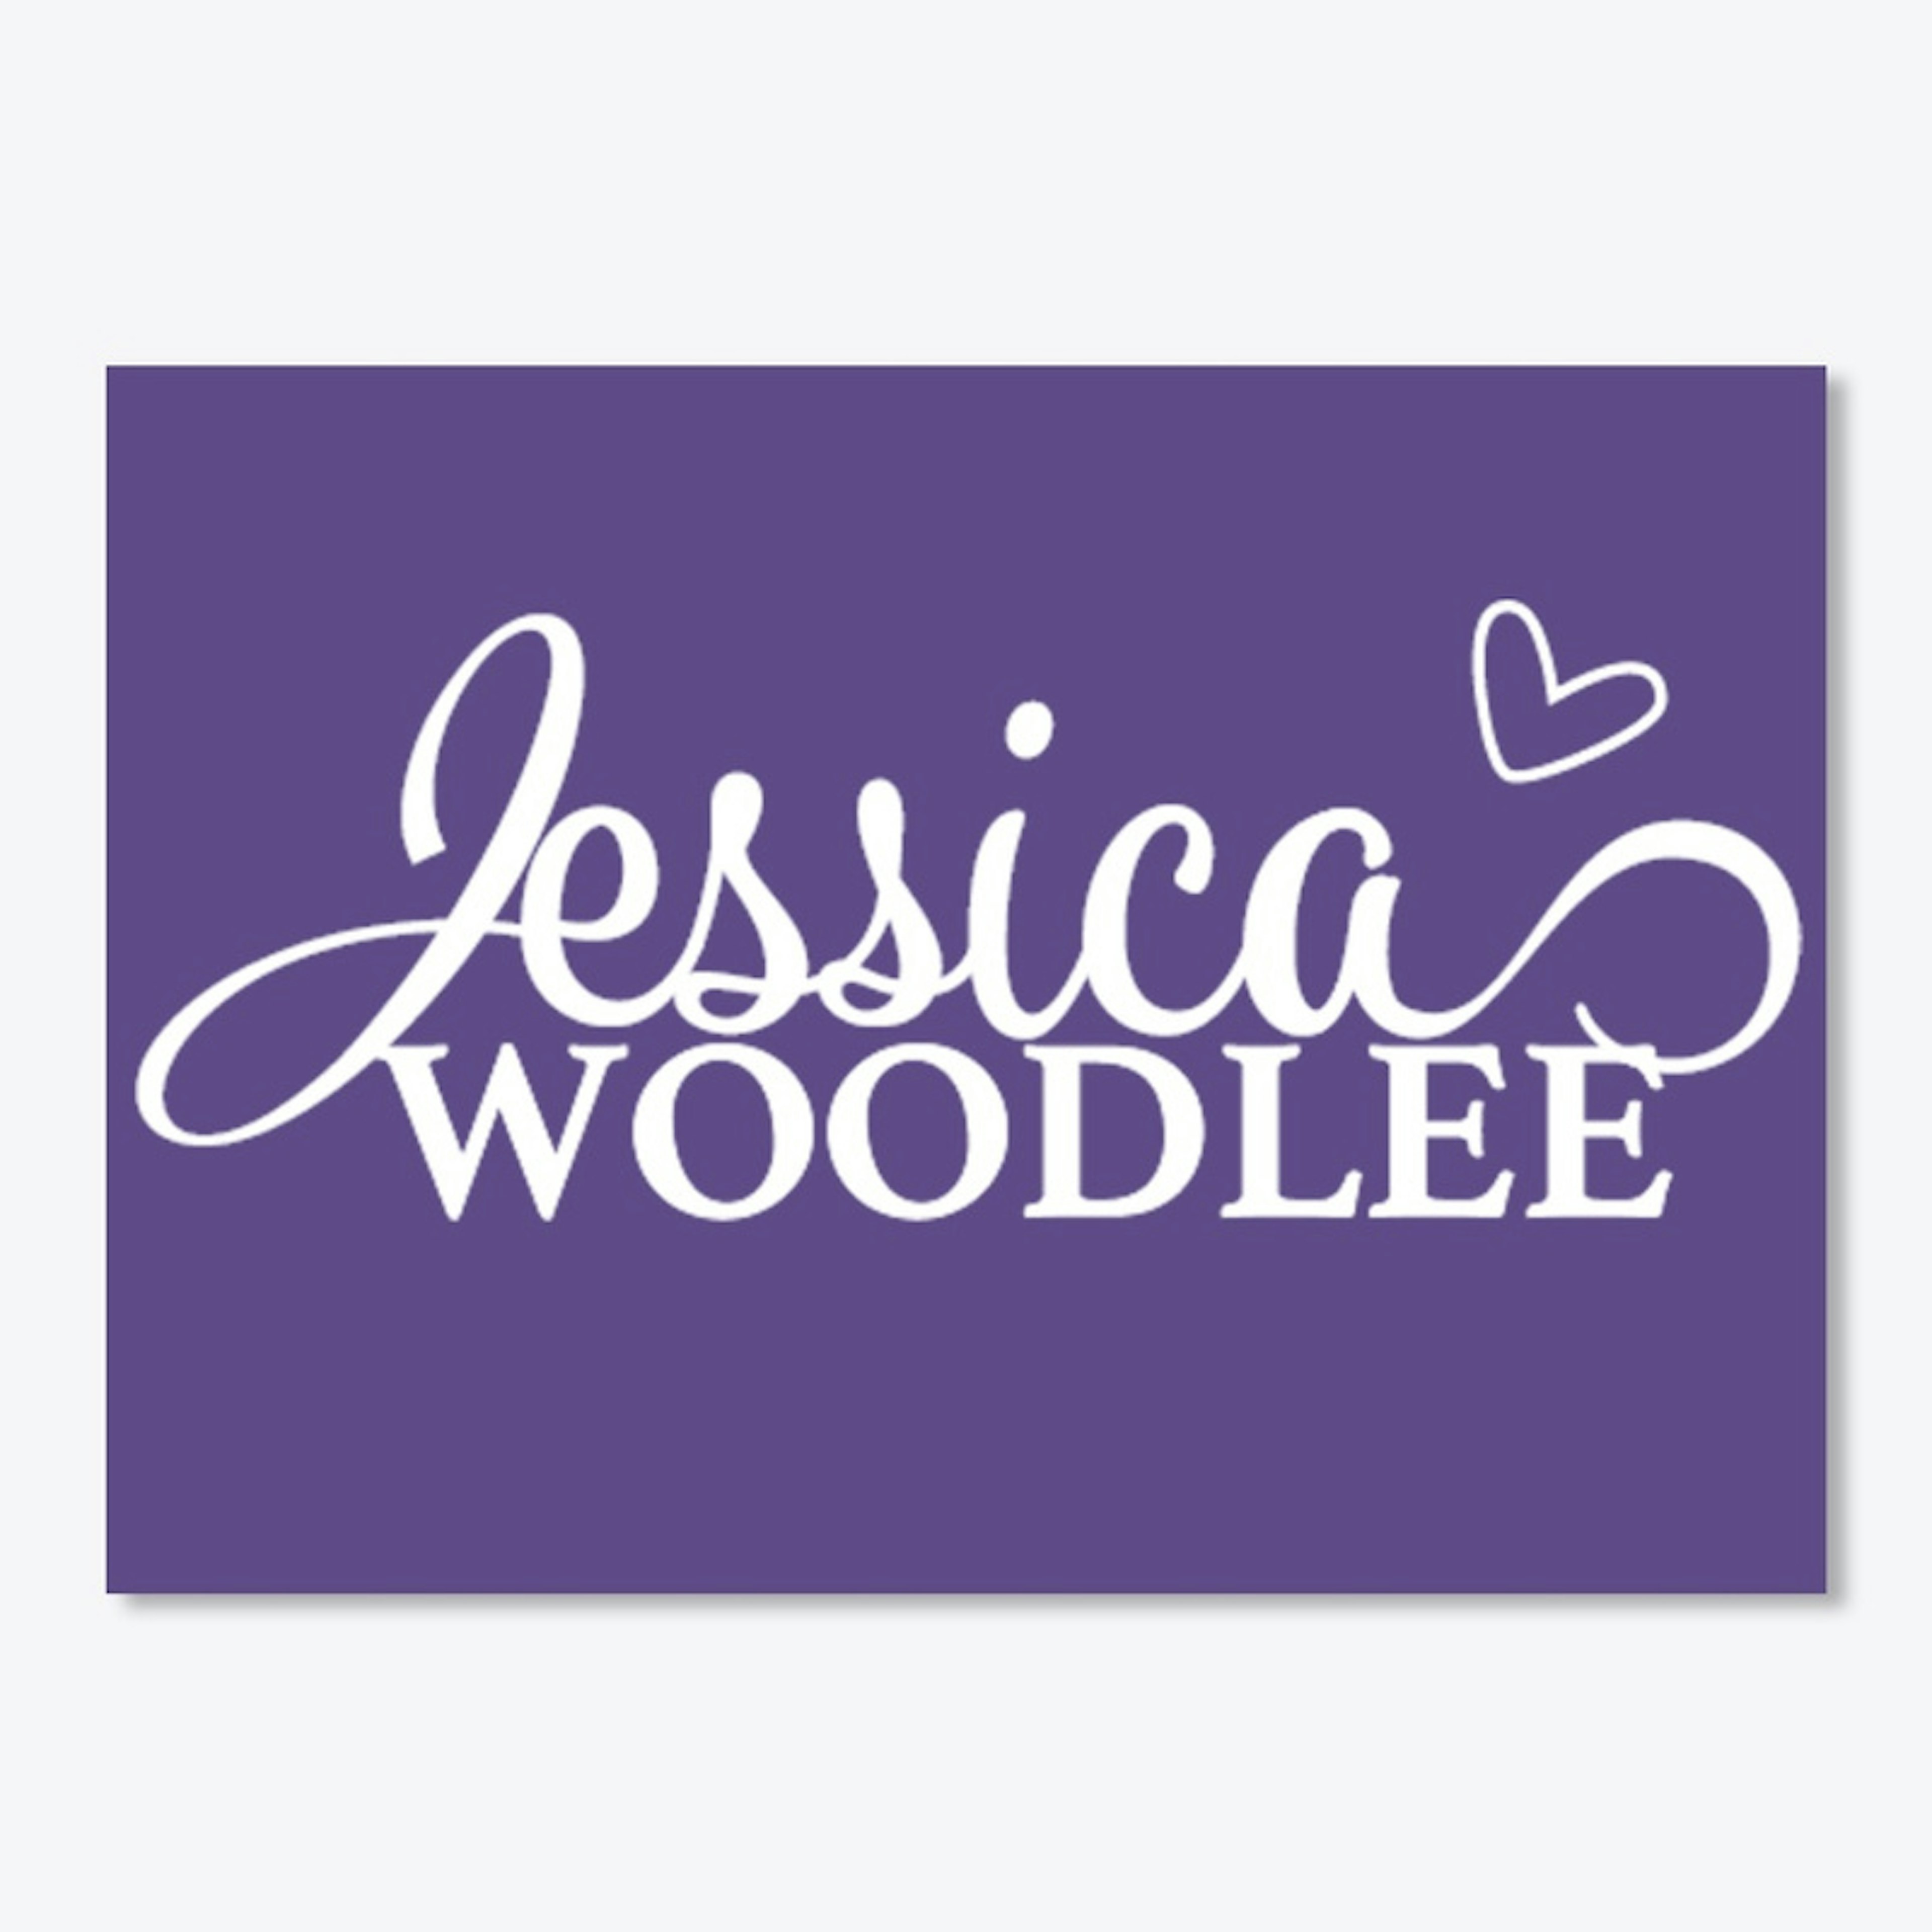 Jessica Woodlee Logo Stickers